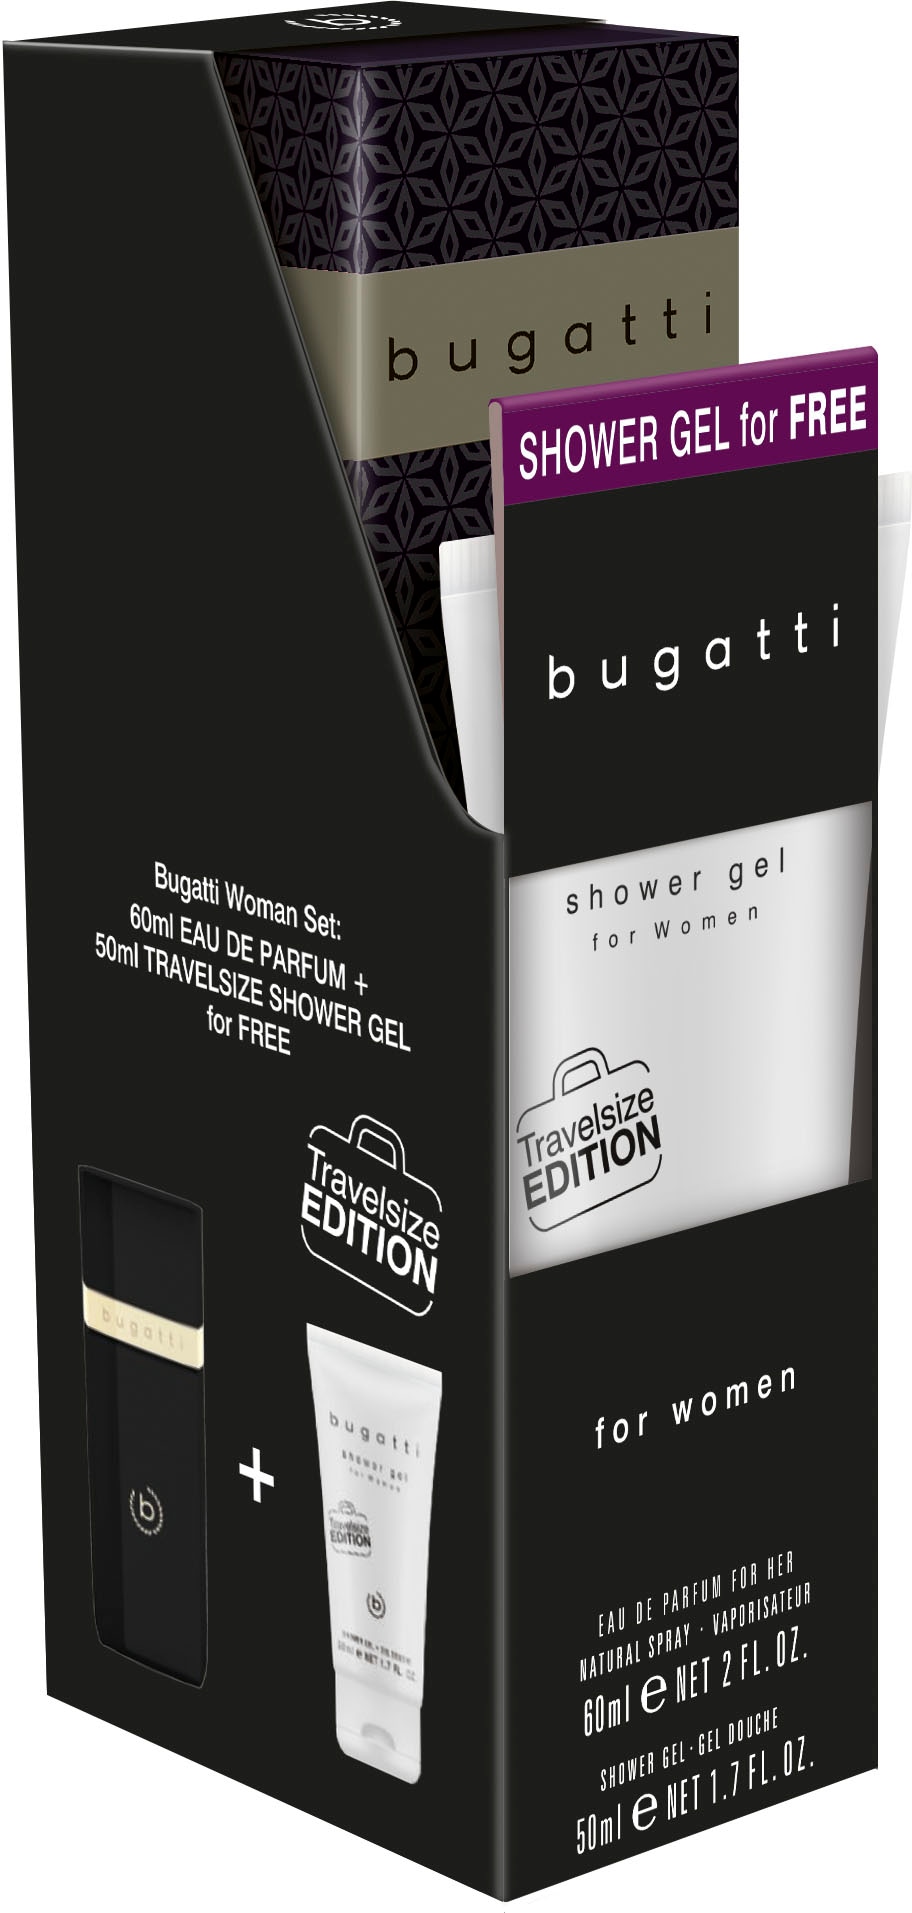 BAUR | Duschgel Intensa Bundle«, bugatti ml 60 Parfum 50 de tlg.) Eau Eleganza (2 »Bugatti ml + (gratis) EdP